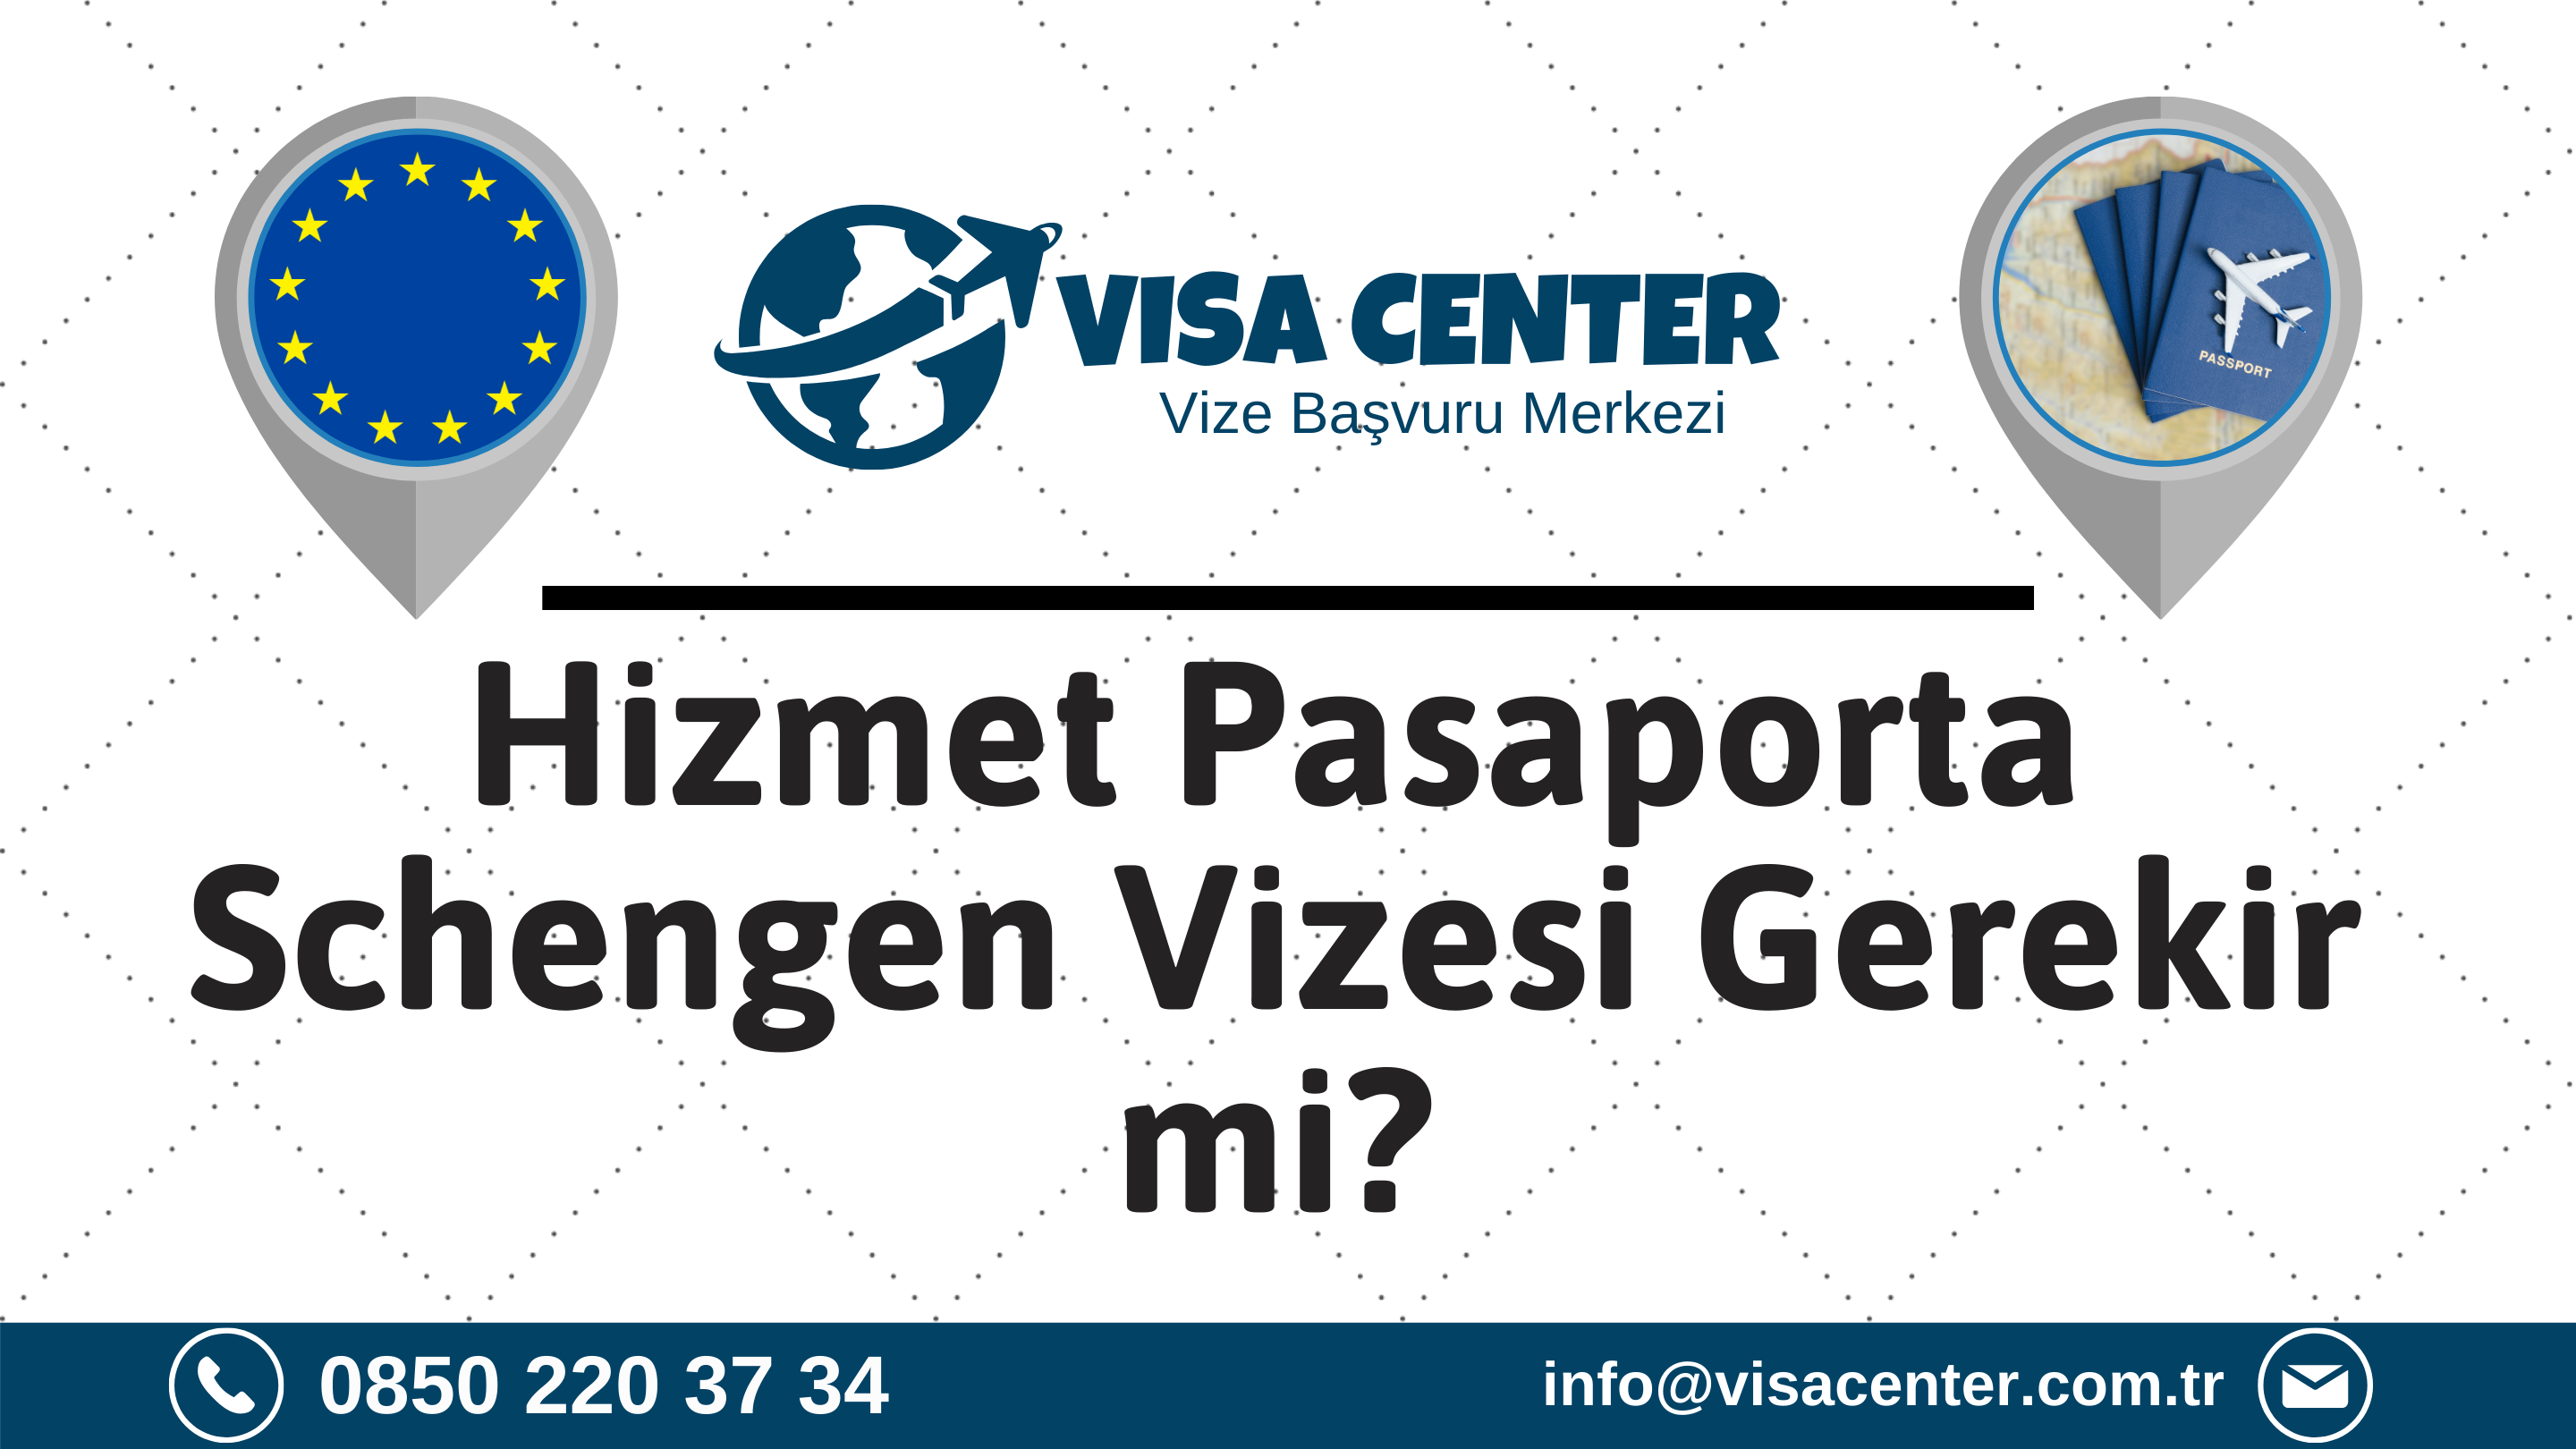 Hizmet Pasaporta Schengen Vizesi Gerekir Mi